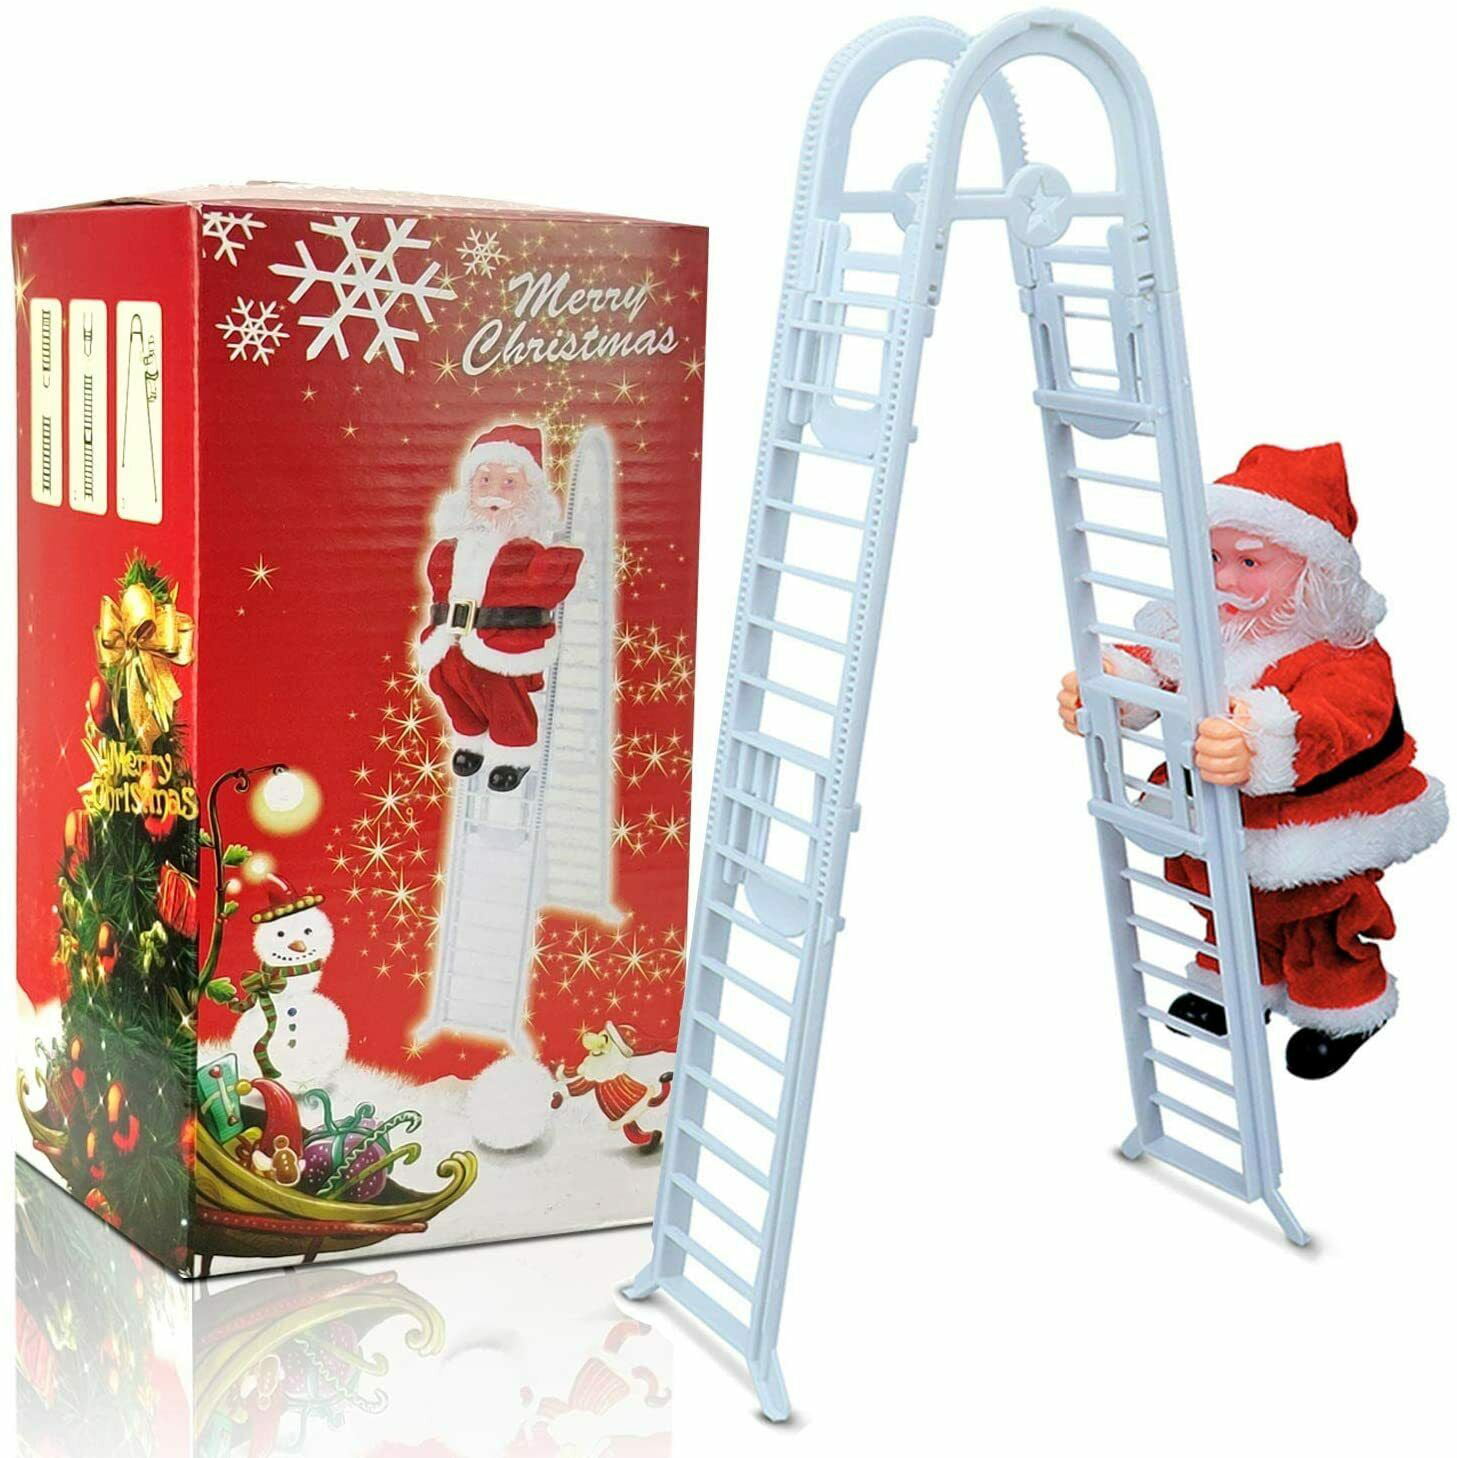 Electric Santa Claus Climbing Ladder Animated Music Jingle Bell Xmas Decor Toys